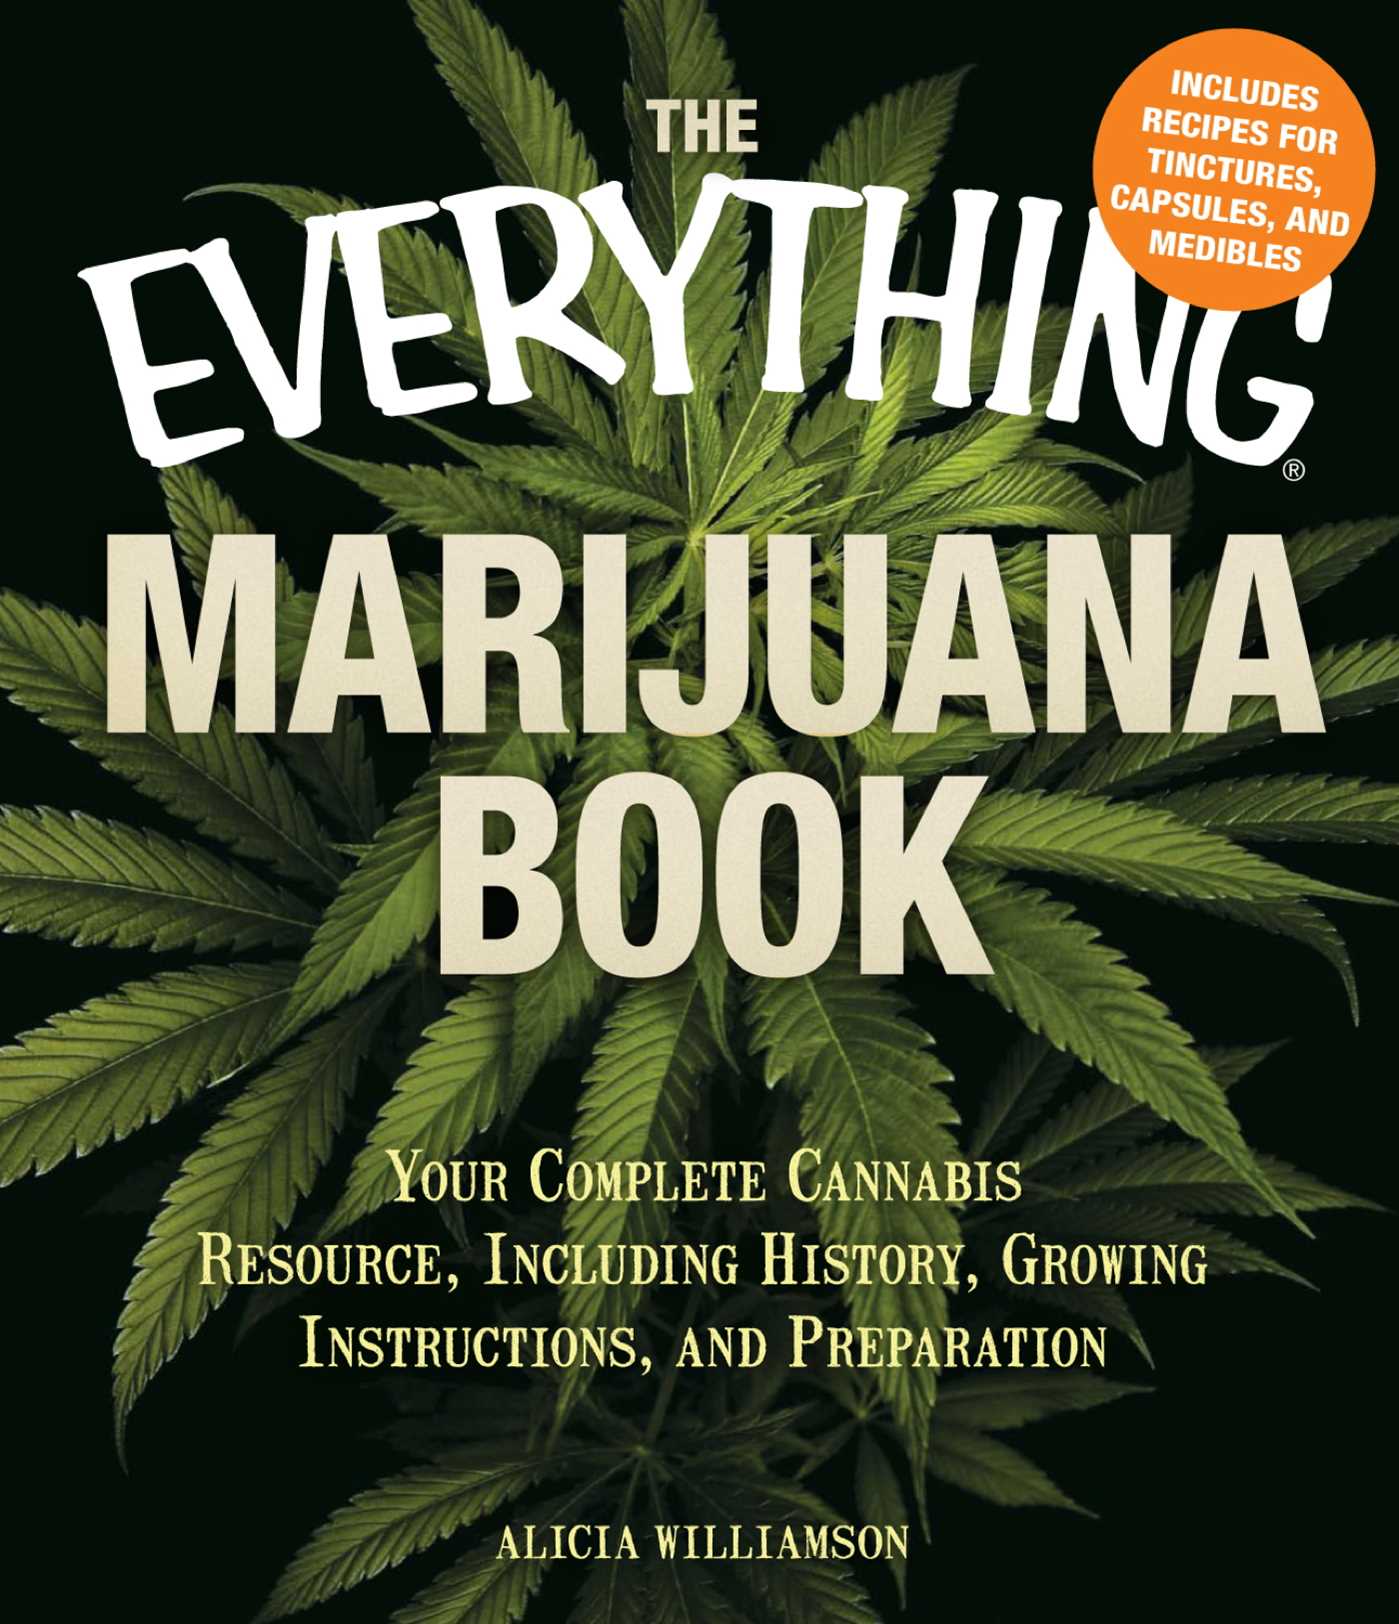 Grow stories. Книги про марихуану. Травка книжка. Читайте книги марихуана. Пожиратели гашиша книга.